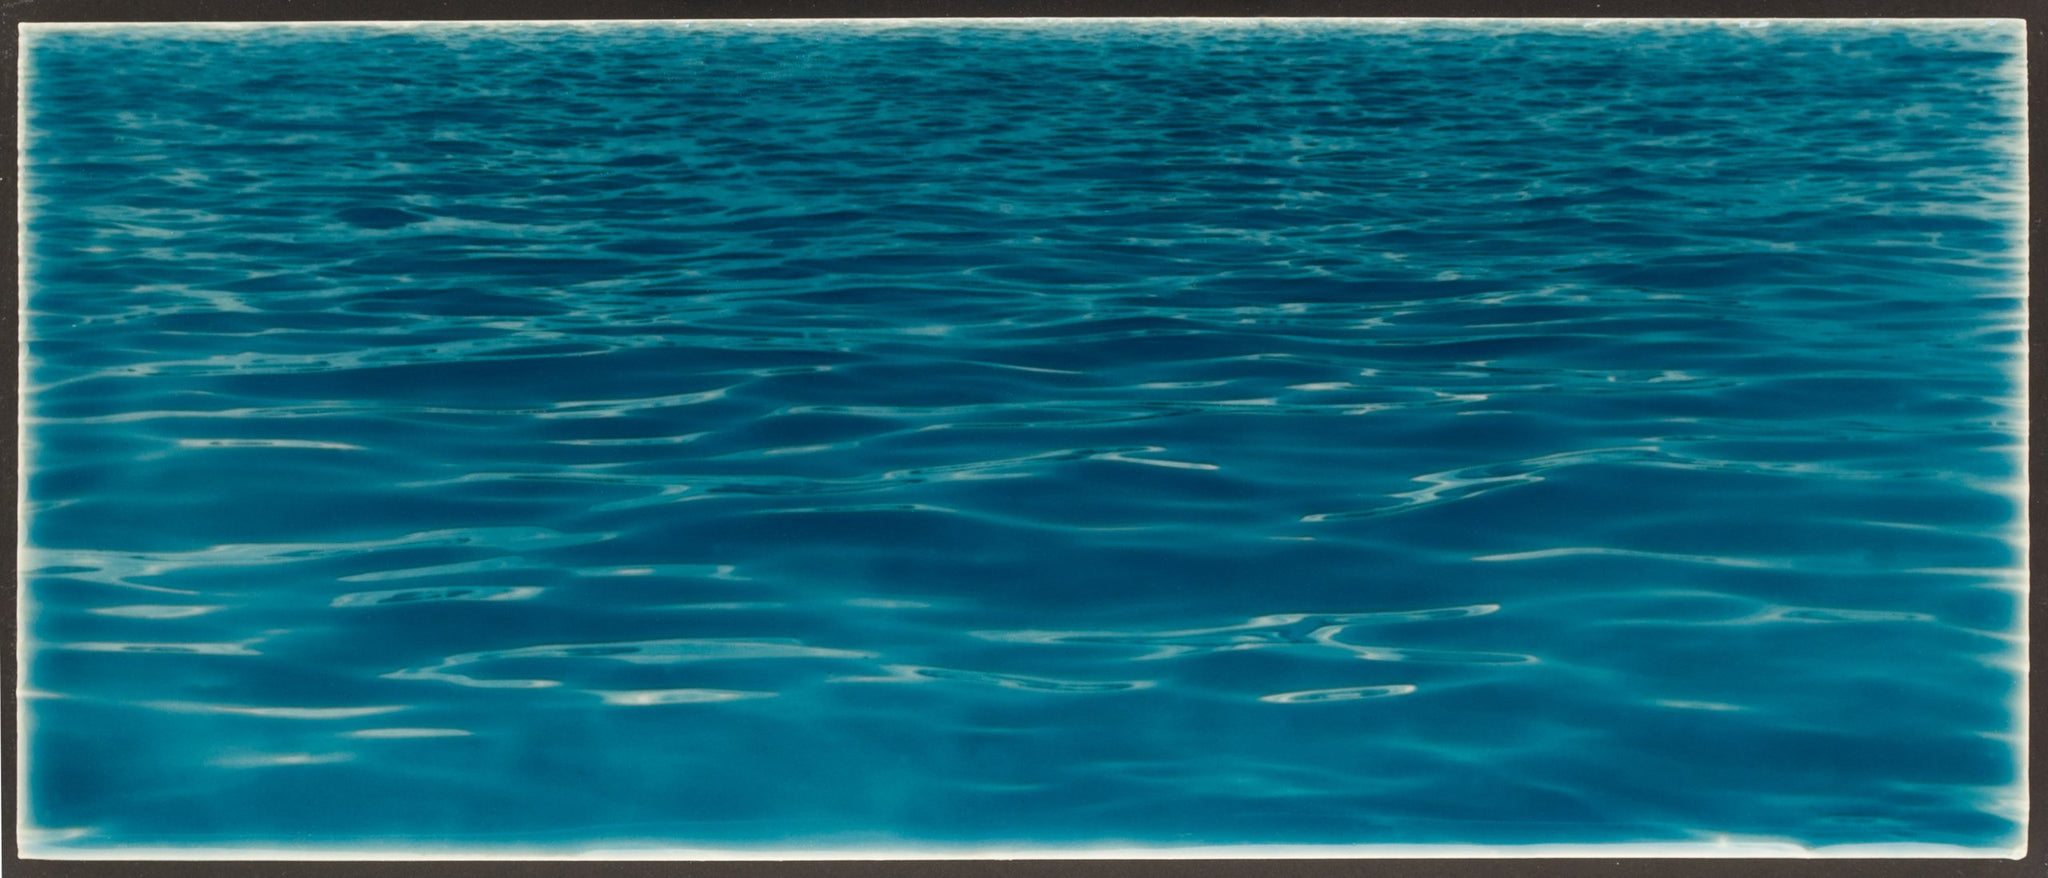 Beach Themed Tile Backsplash Deep blue ocean water tile